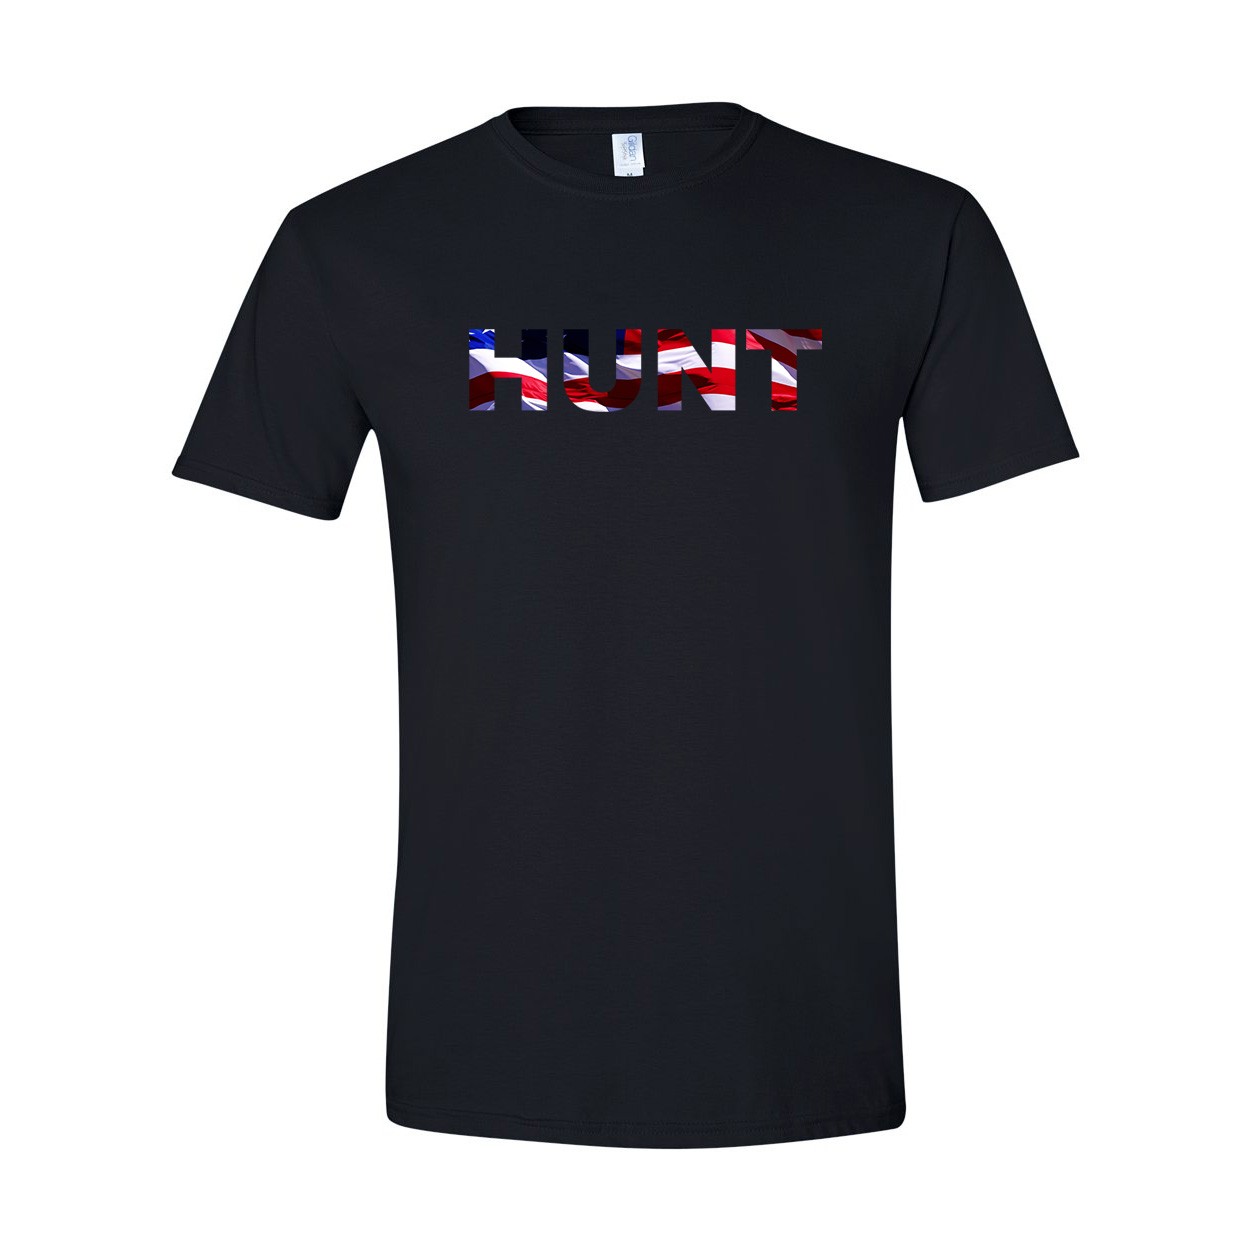 Hunt Brand Logo Classic T-Shirt Black (USA Flag Logo)